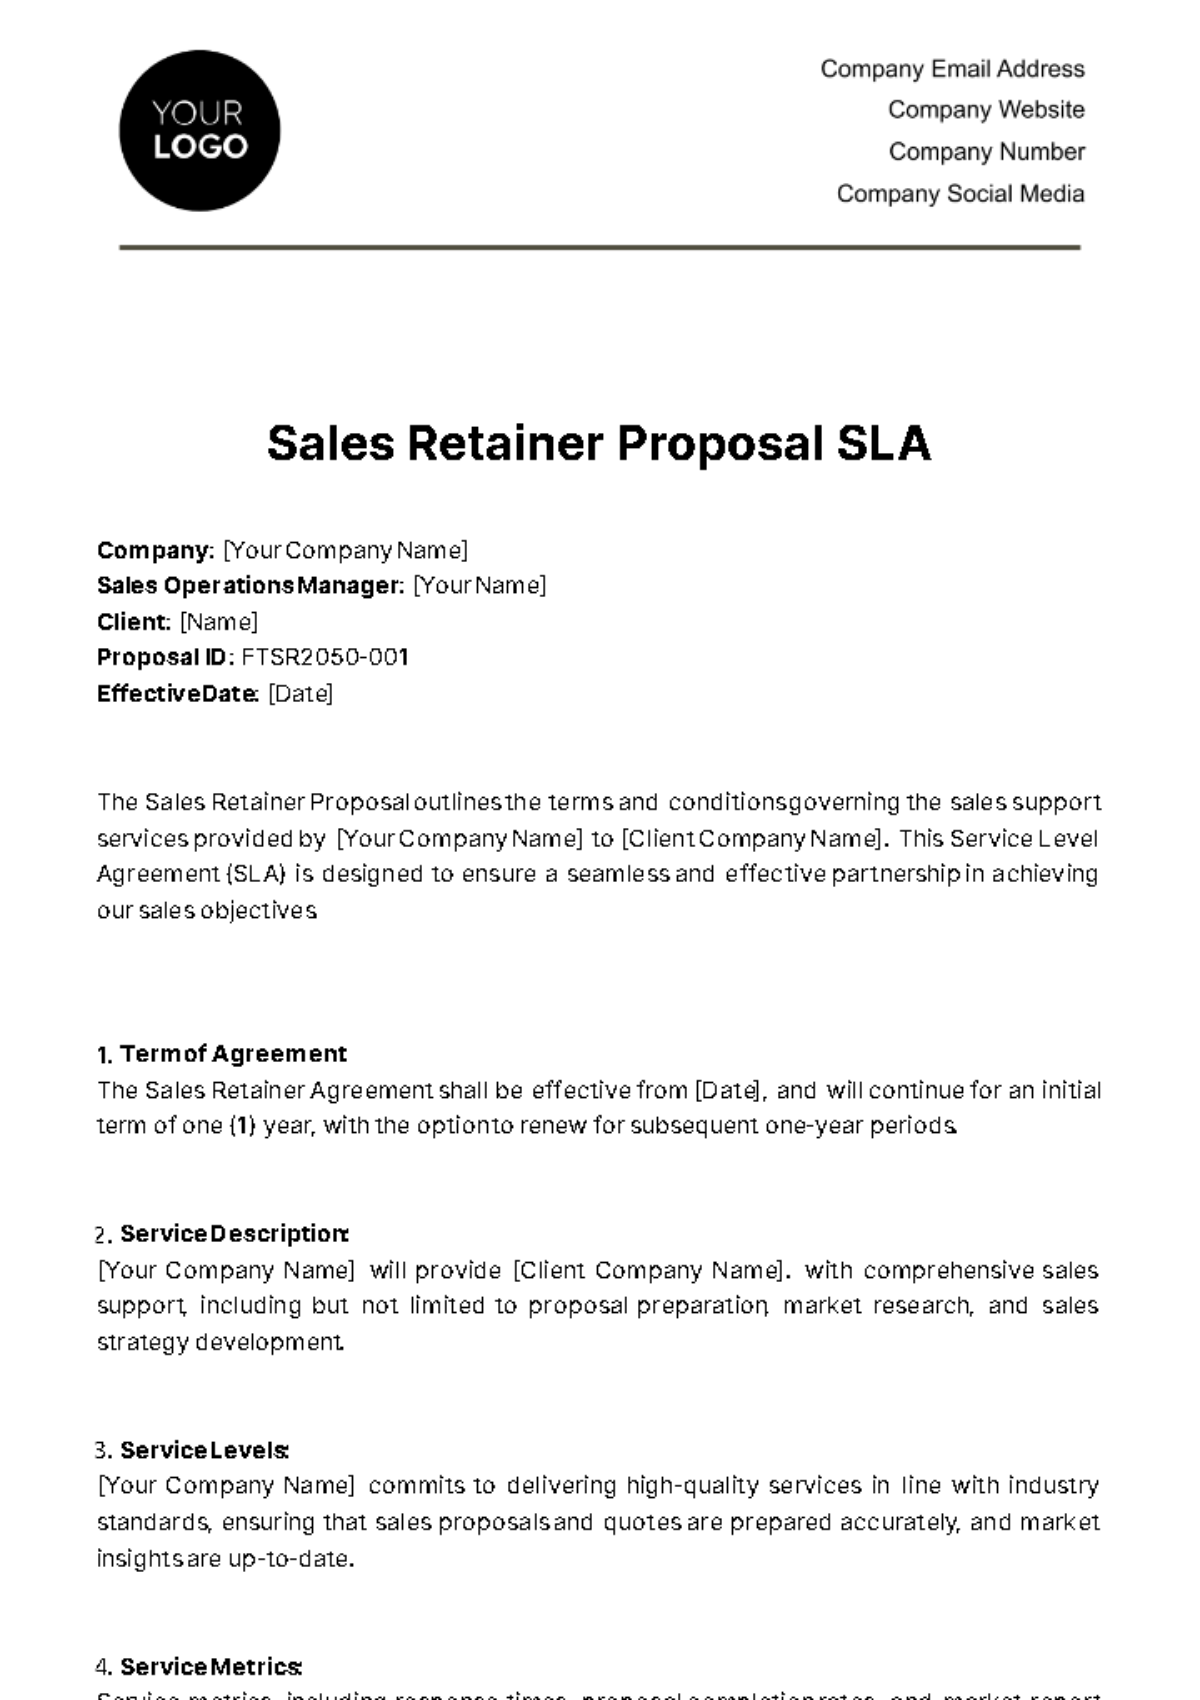 Sales Retainer Proposal SLA Template